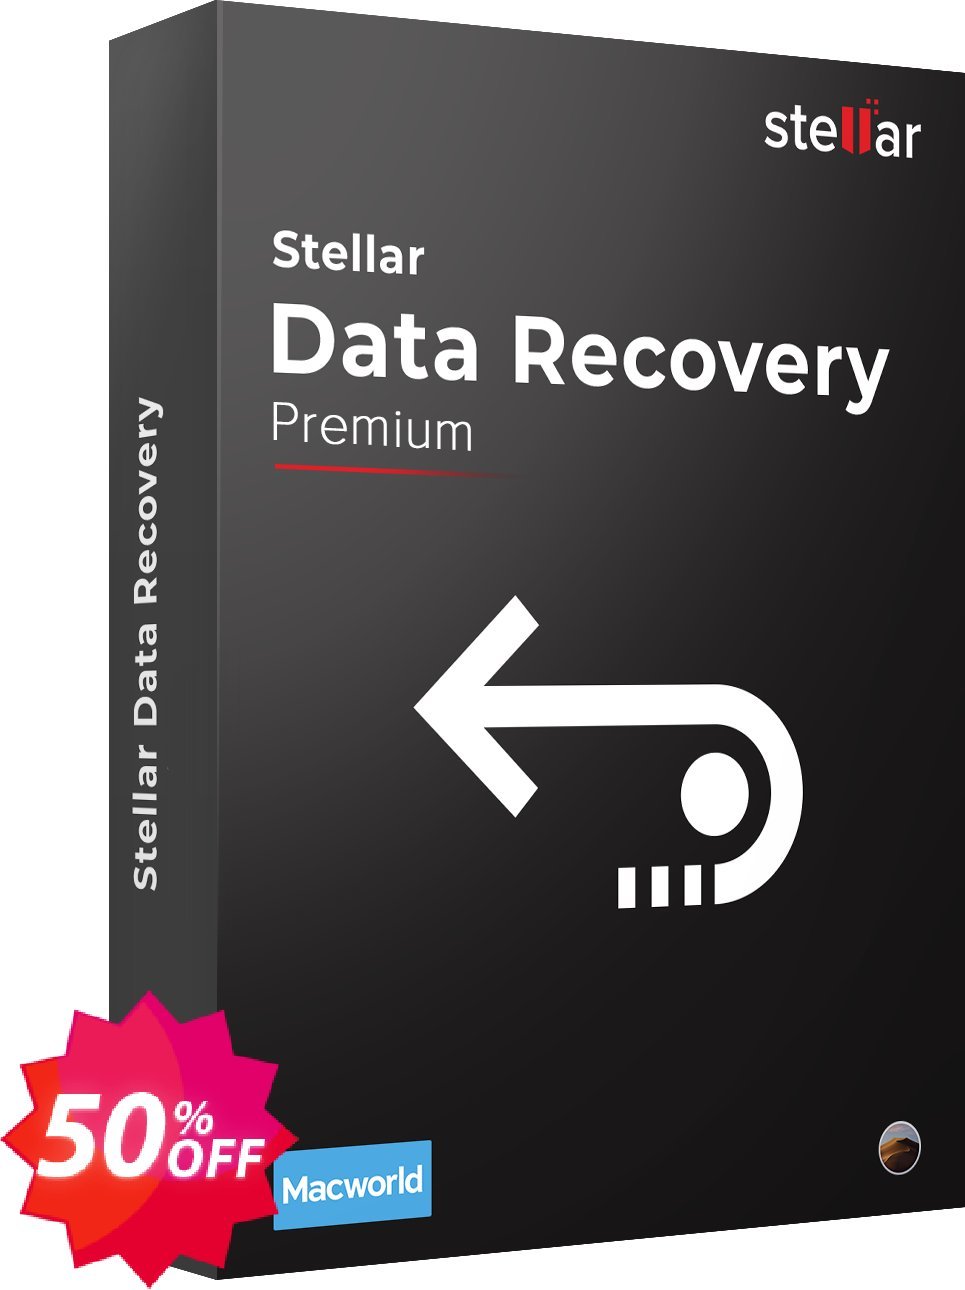 Stellar Data Recovery Premium for MAC Coupon code 50% discount 